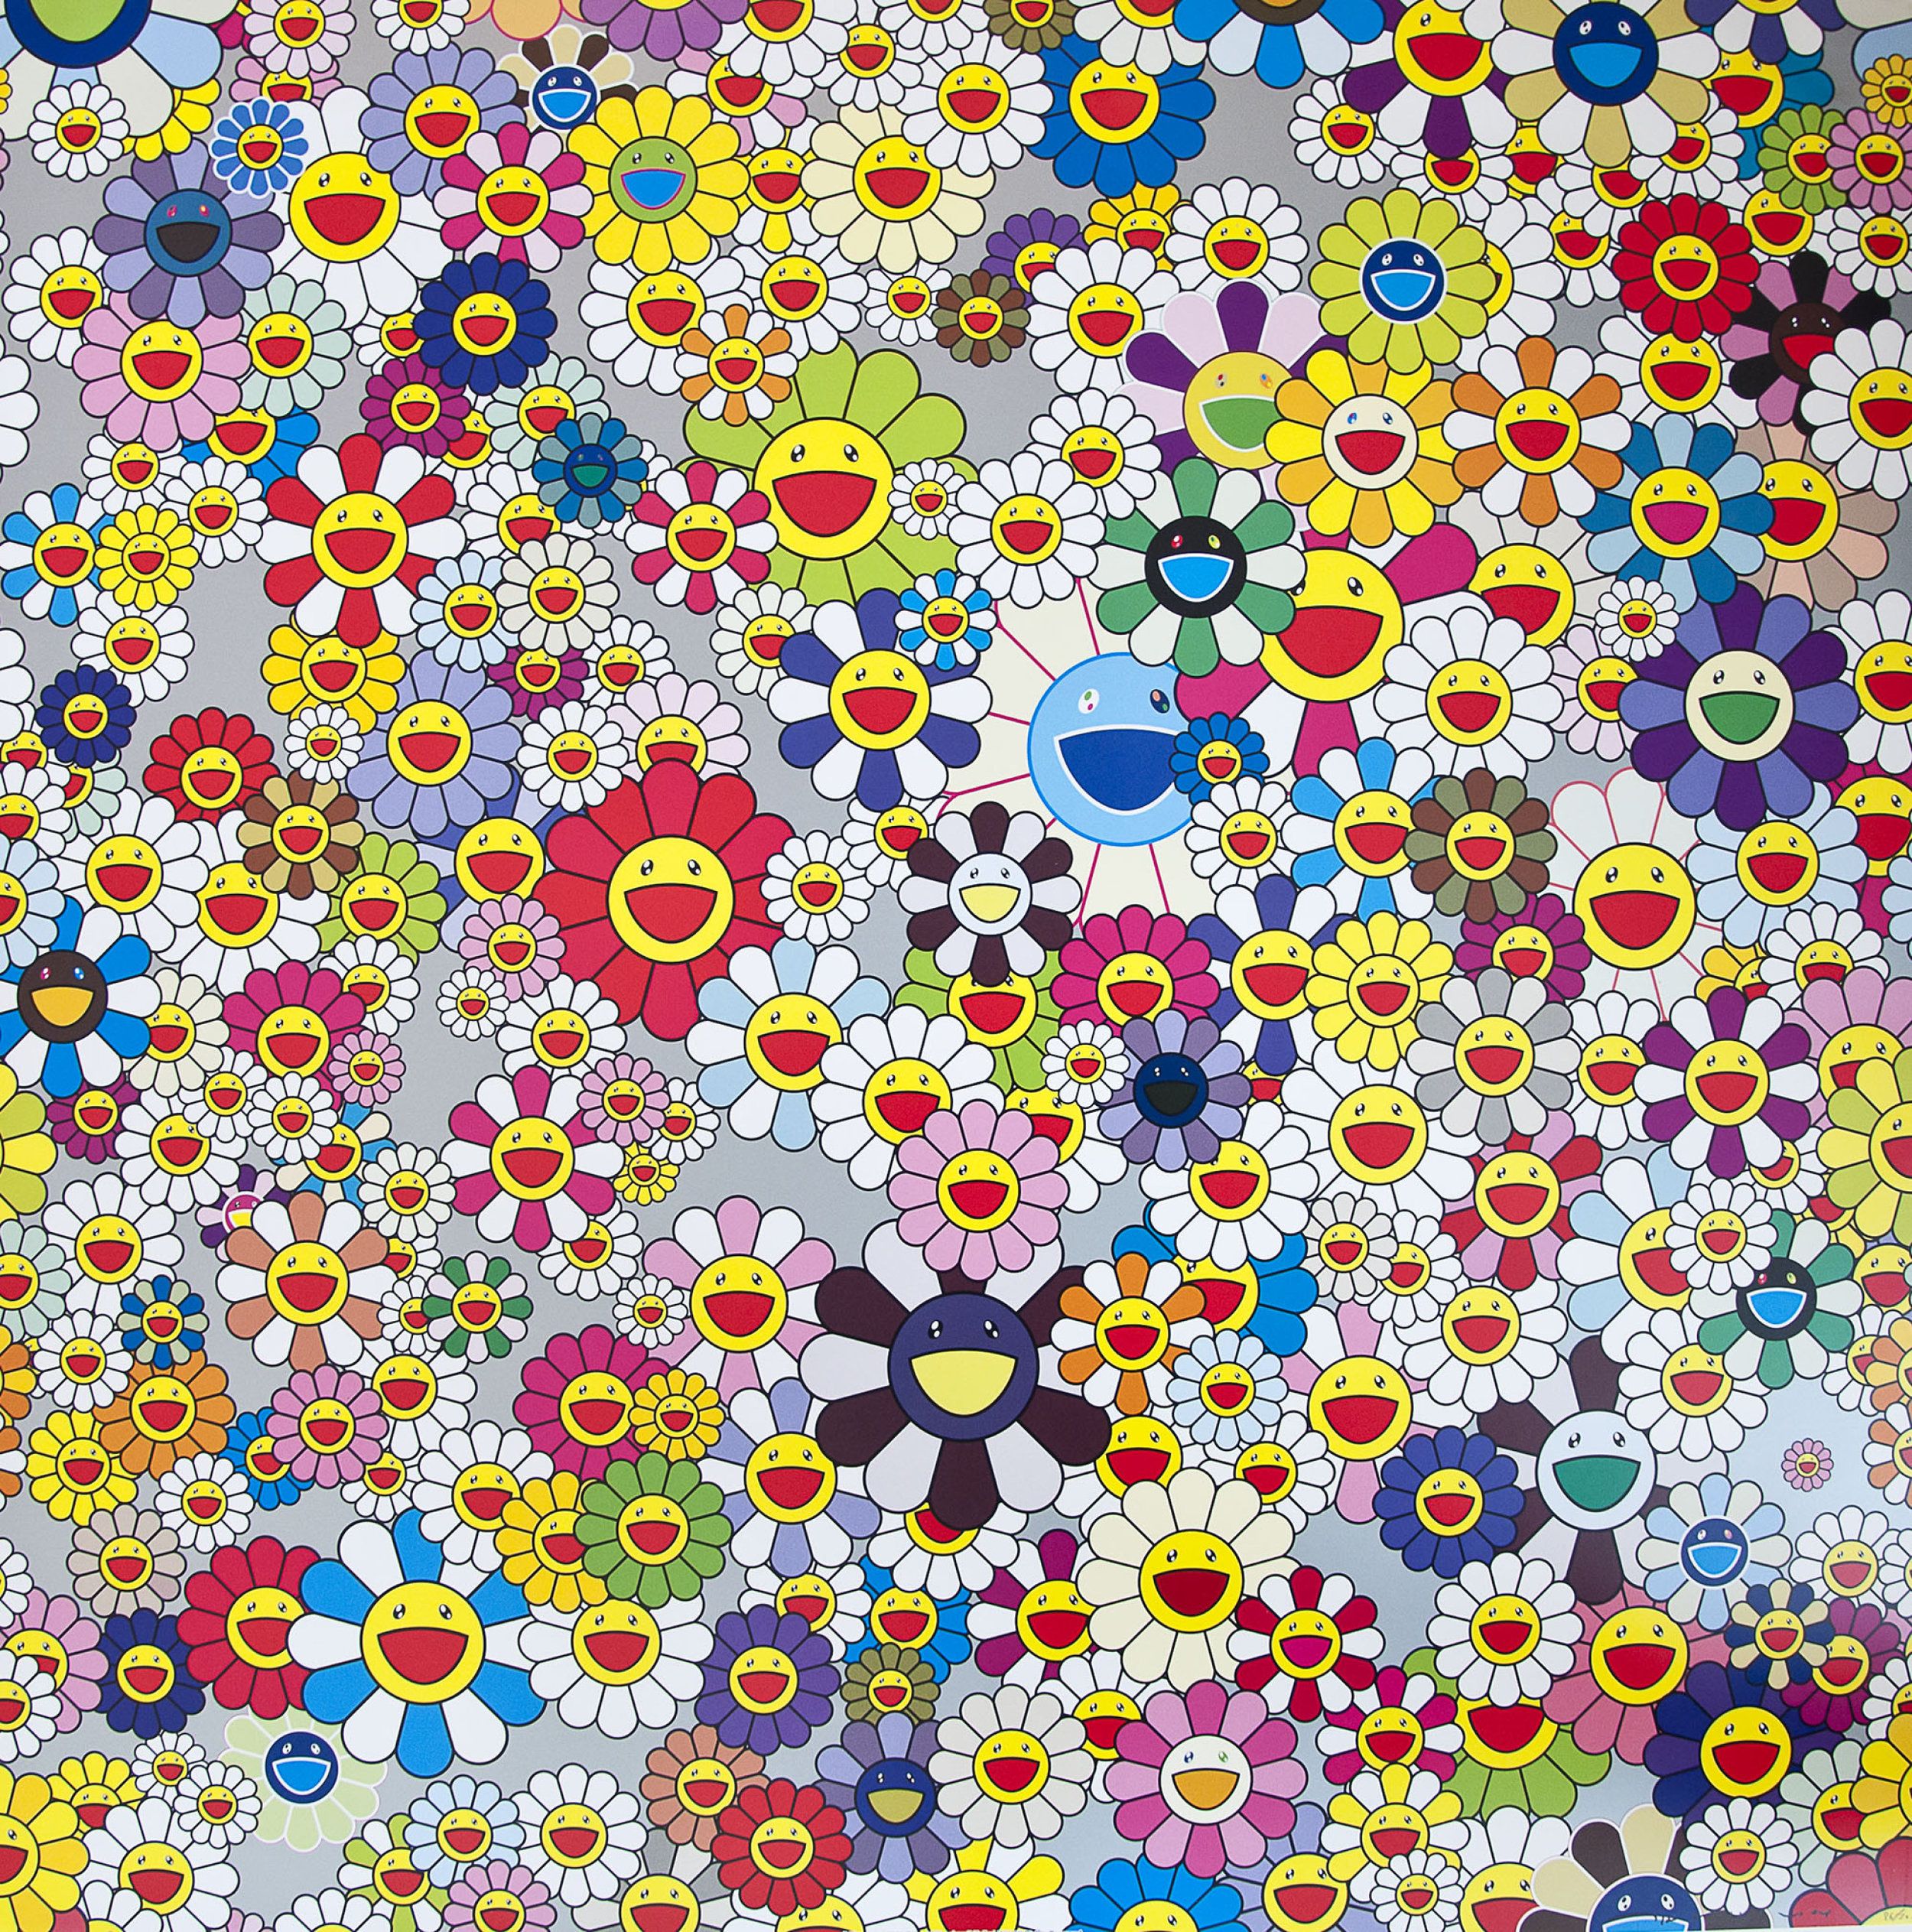 Takashi Murakami Wallpaper Top